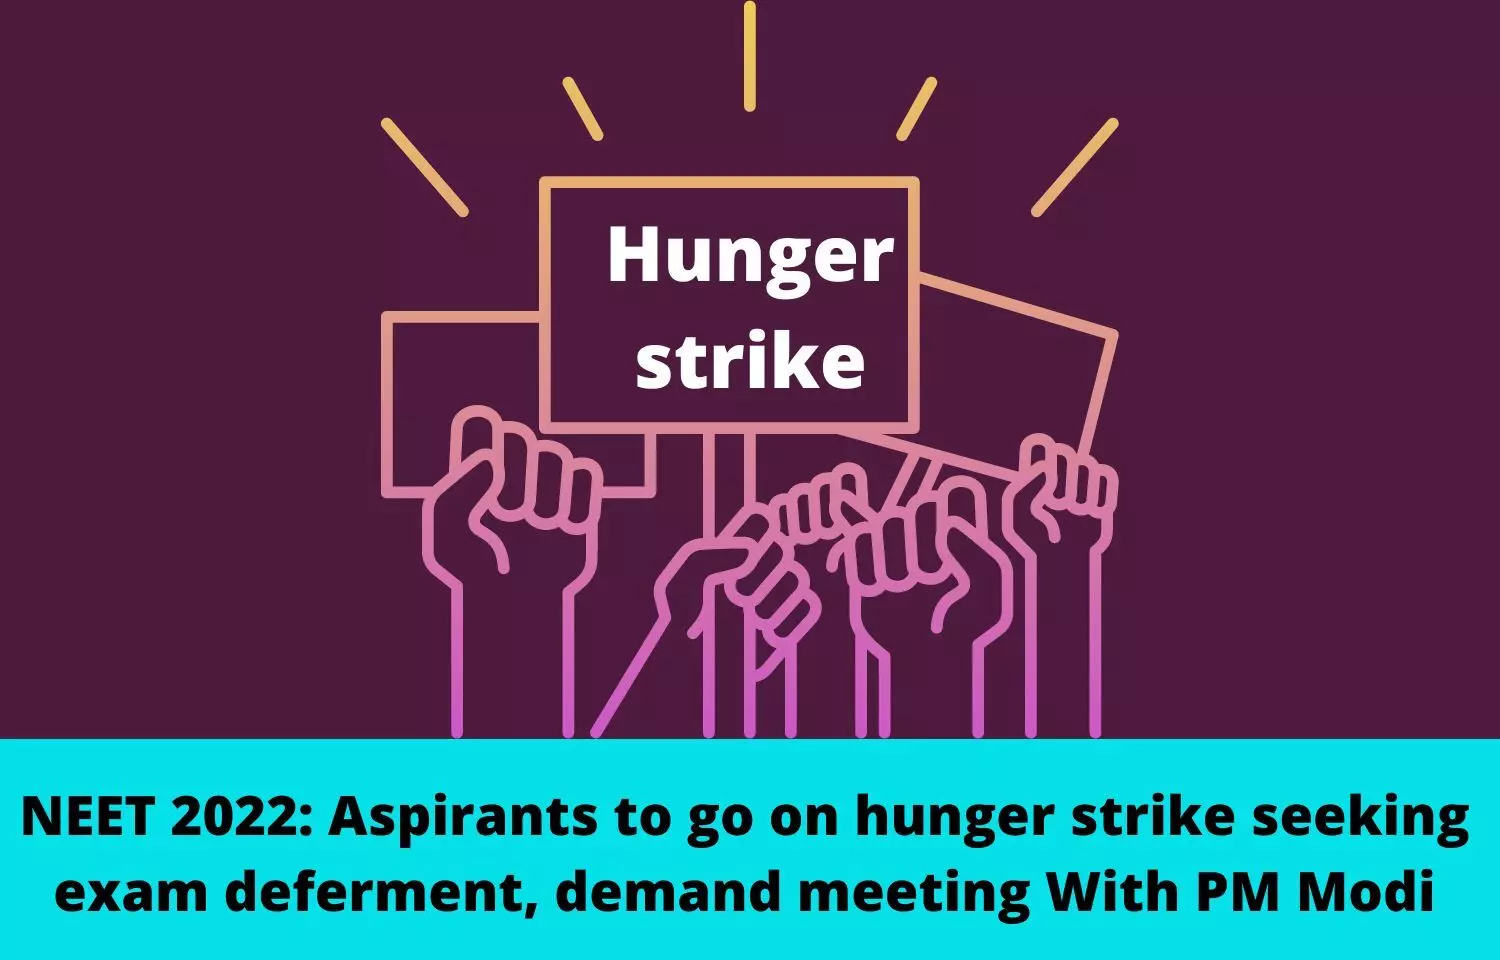 NEET 2022: Aspirants to go on hunger strike seeking exam deferment, demand meeting with PM Modi